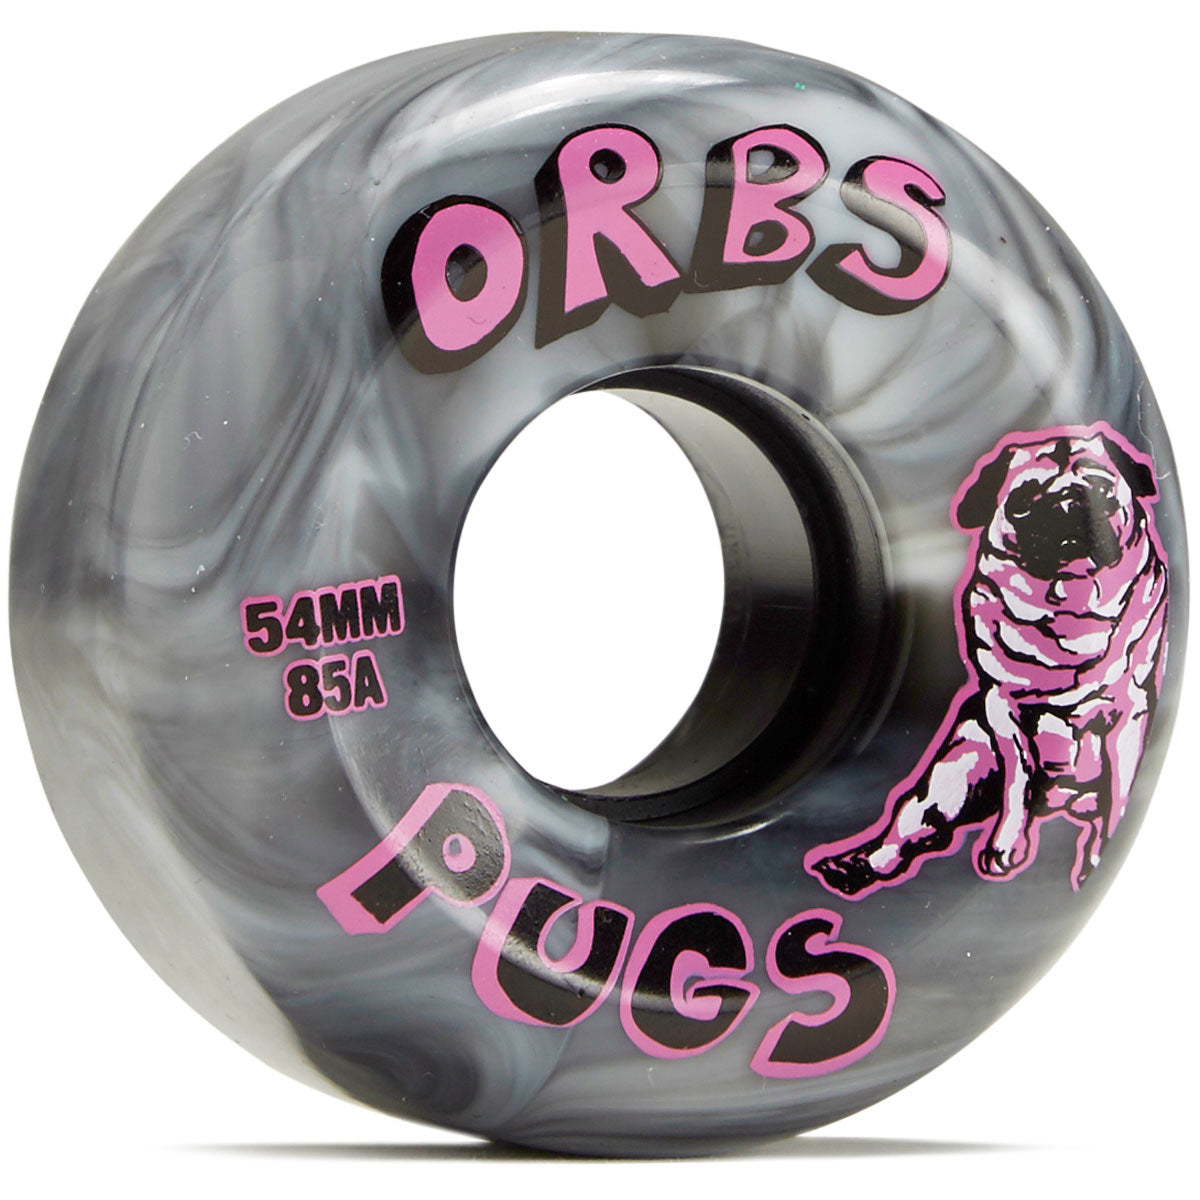 Welcome Orbs Pugs Conical 85A Skateboard Wheels - Black/White Swirl - – CCS